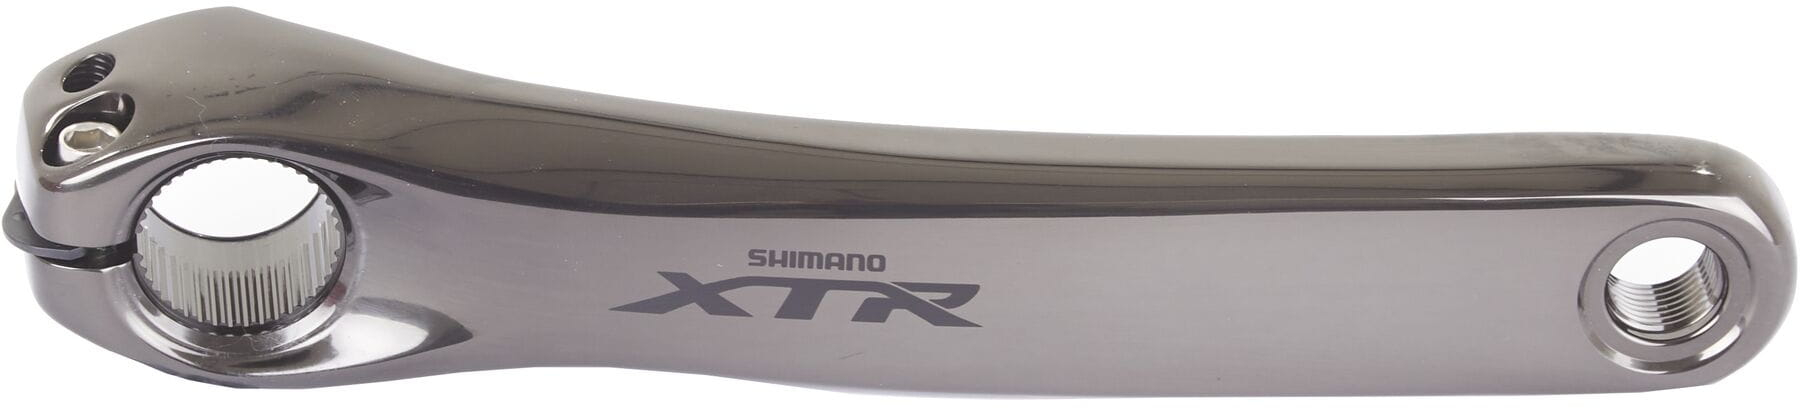 Shimano  FC-M9020 left hand crank arm 175 MM LEFT